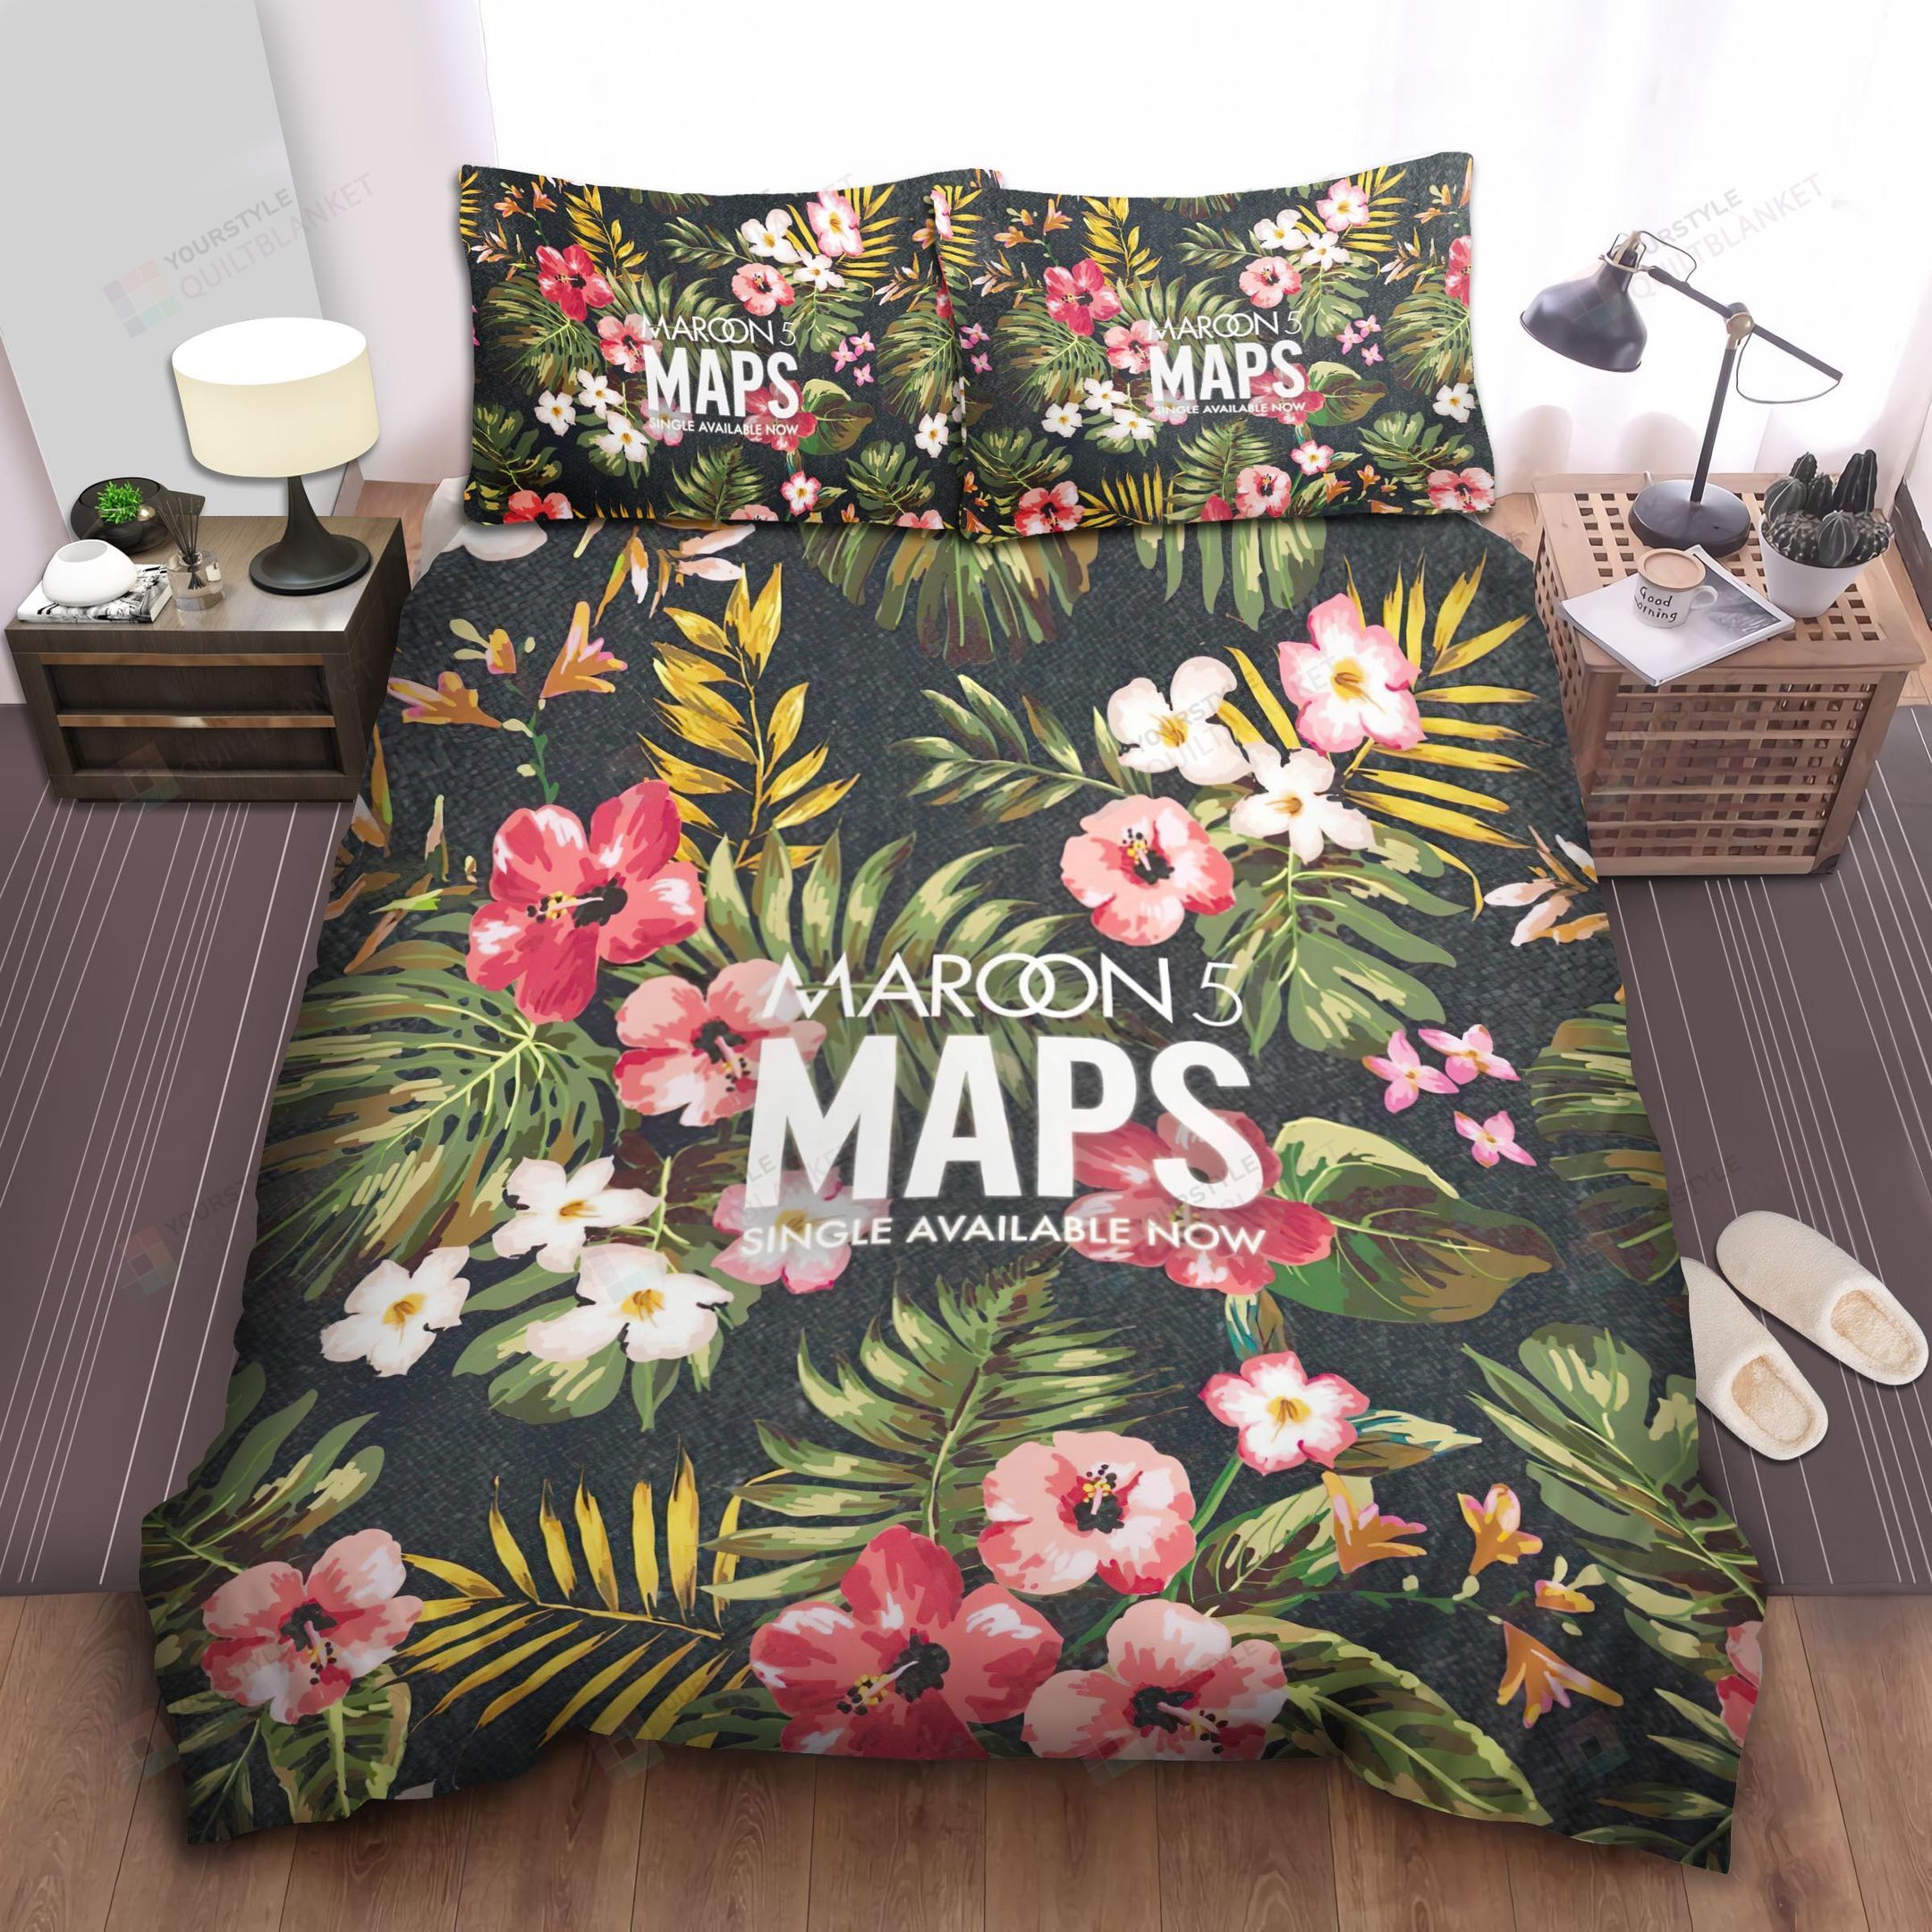 Maroon 5 V Maps Bed Sheets Spread Duvet Cover Bedding Sets